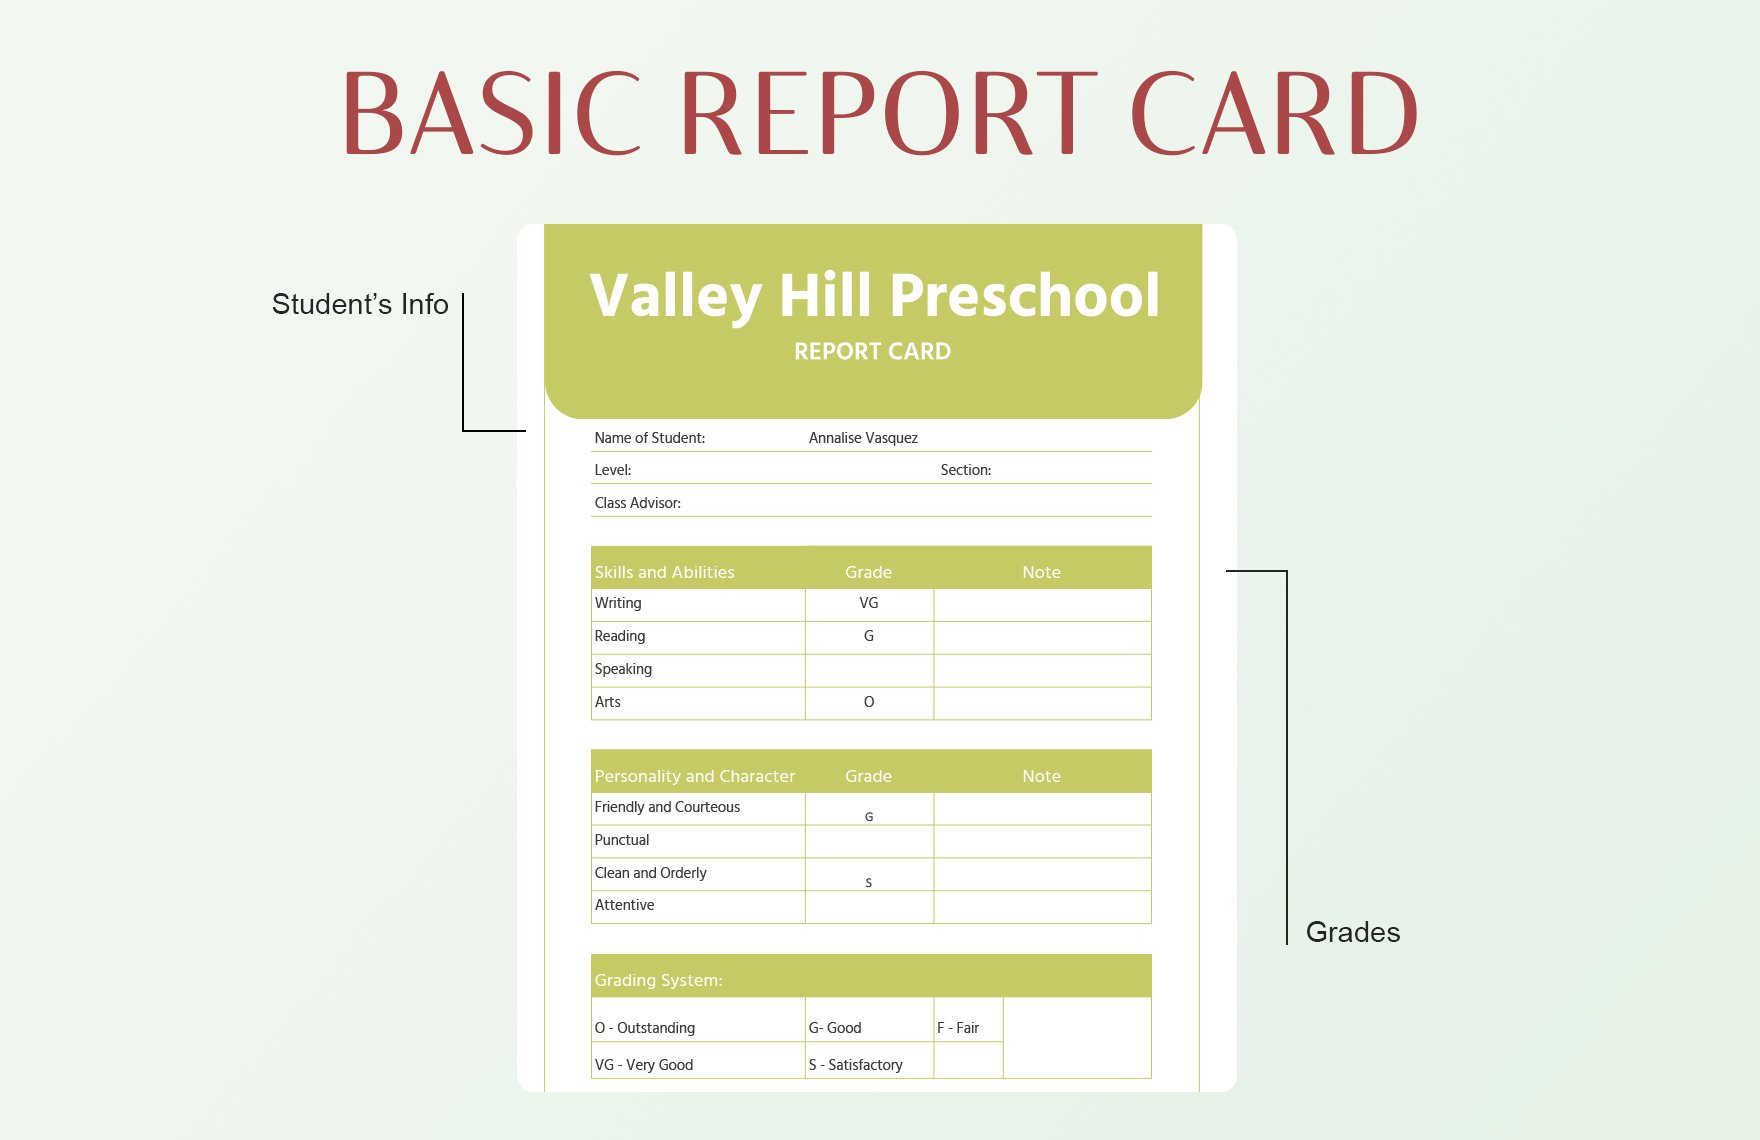 Blank Preschool Report Card Template